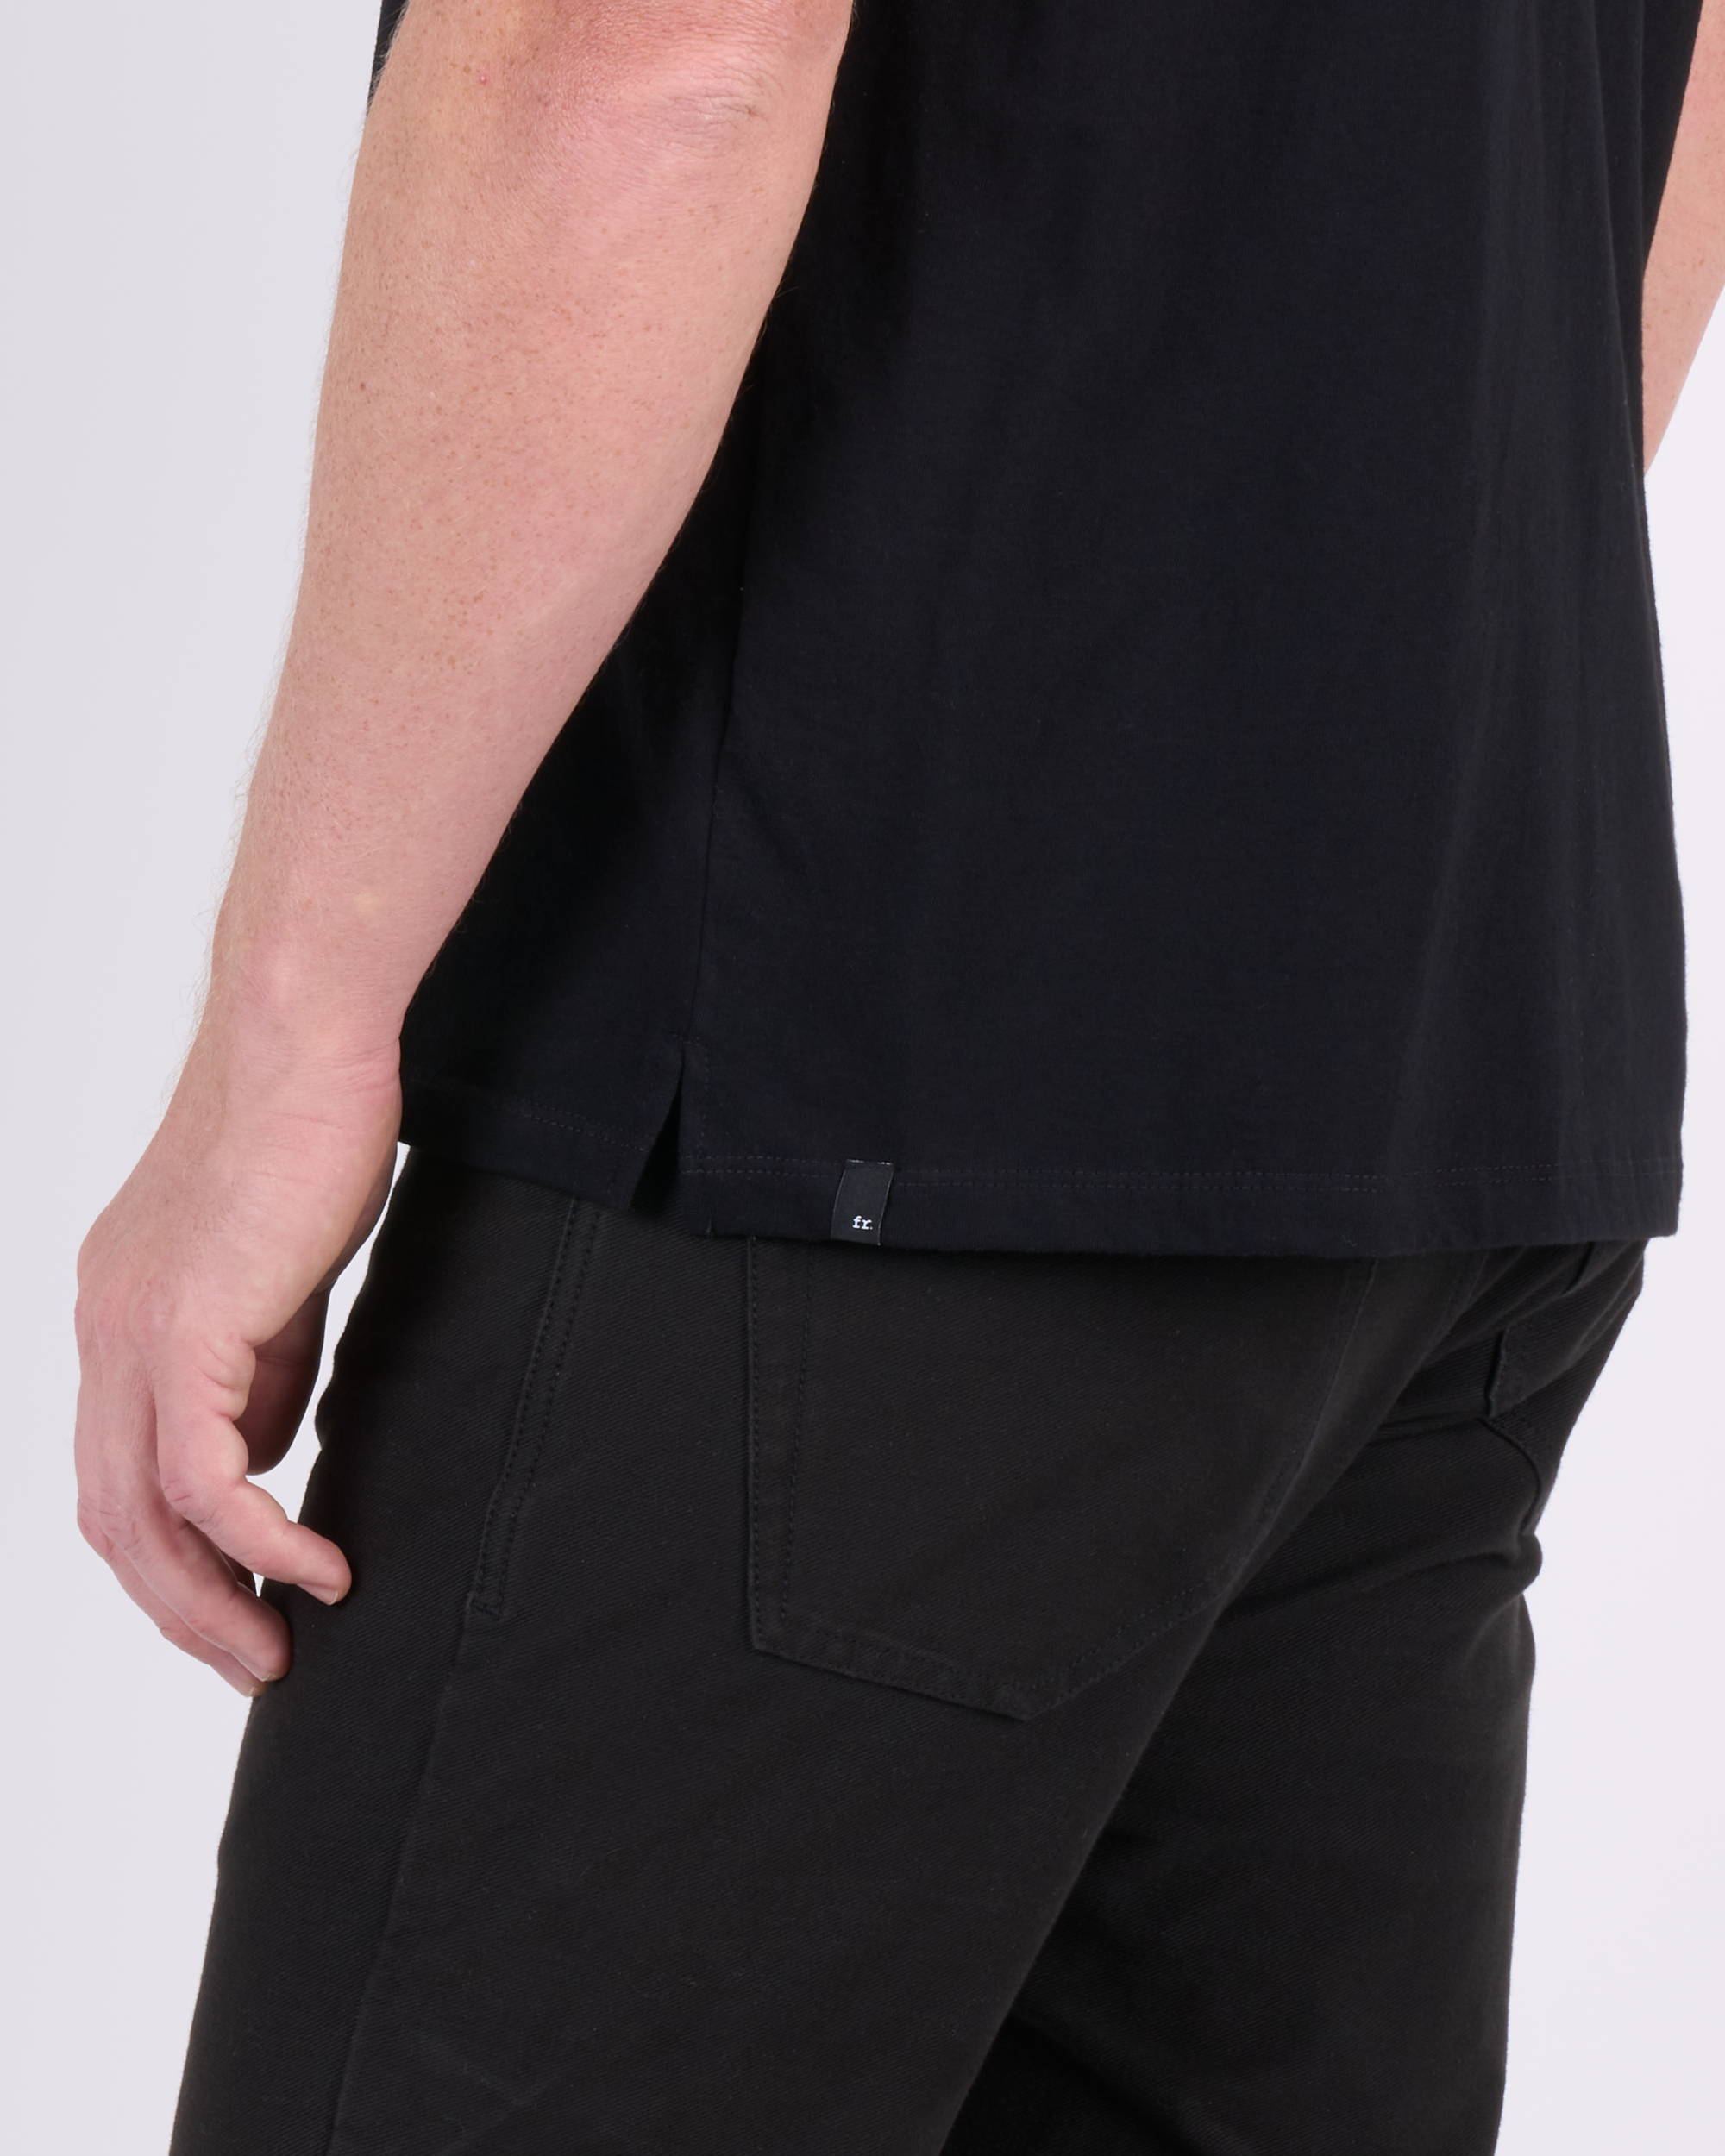 Foreign Rider Co Cotton Black Tiger Graphic T-shirt Bottom Split Side Seam Detail